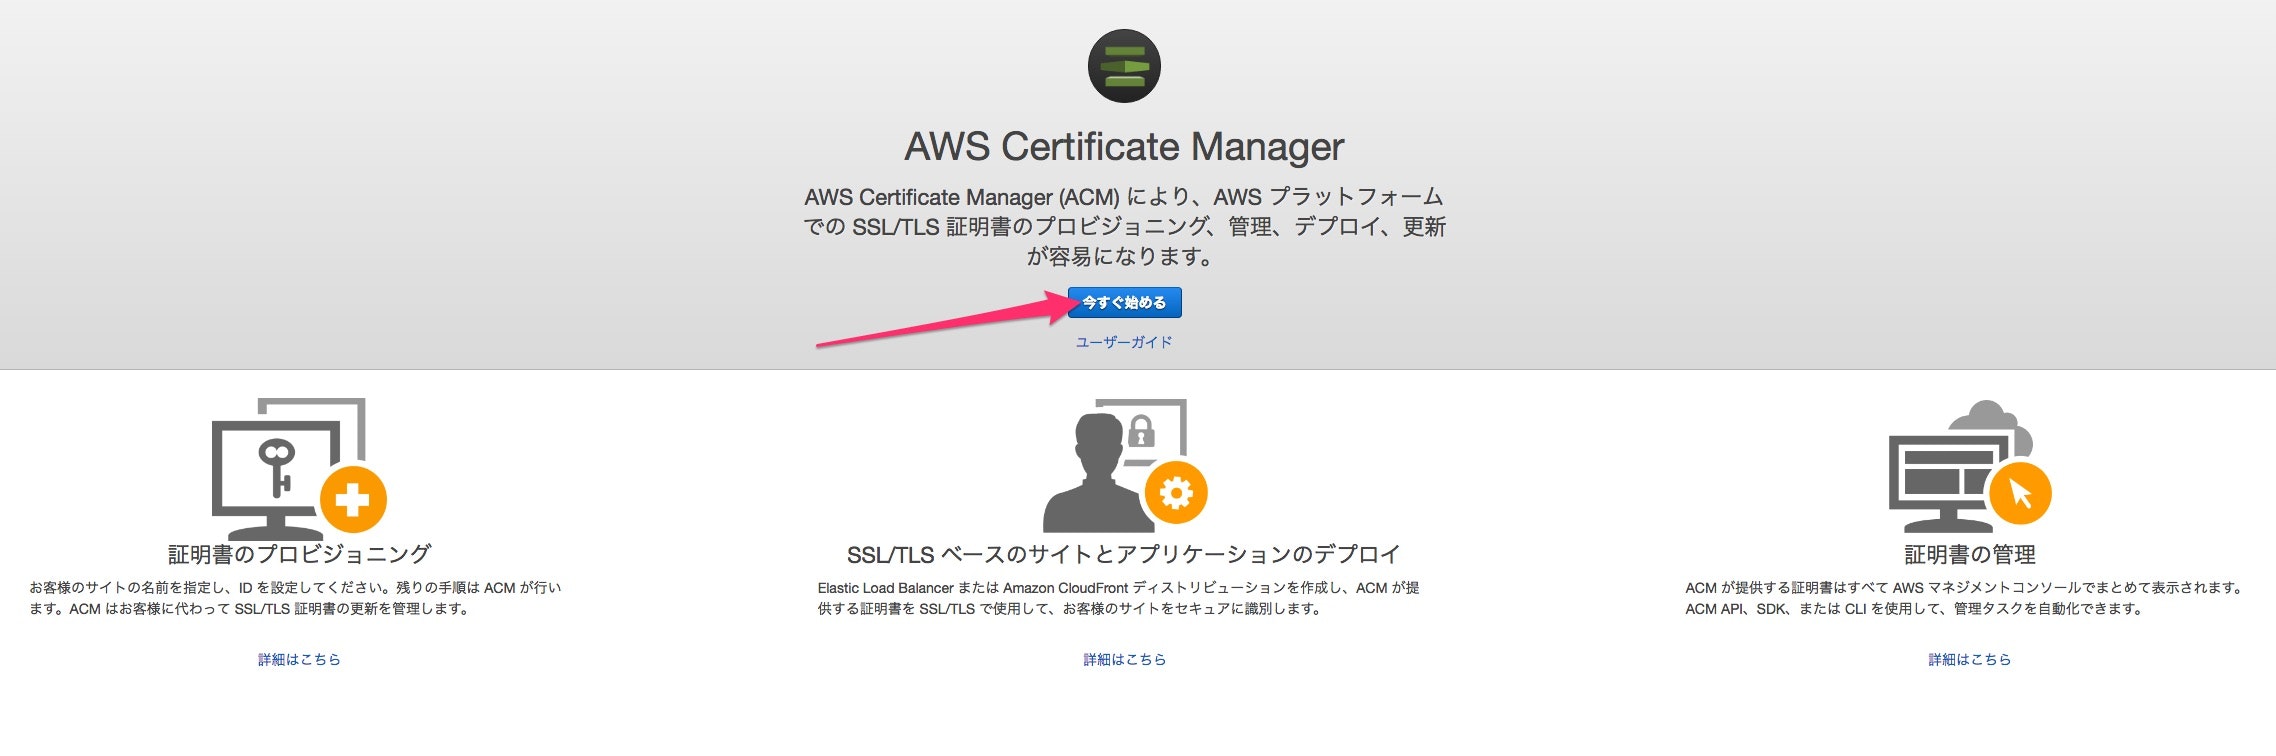 AWS_Certificate_Manager.jpg